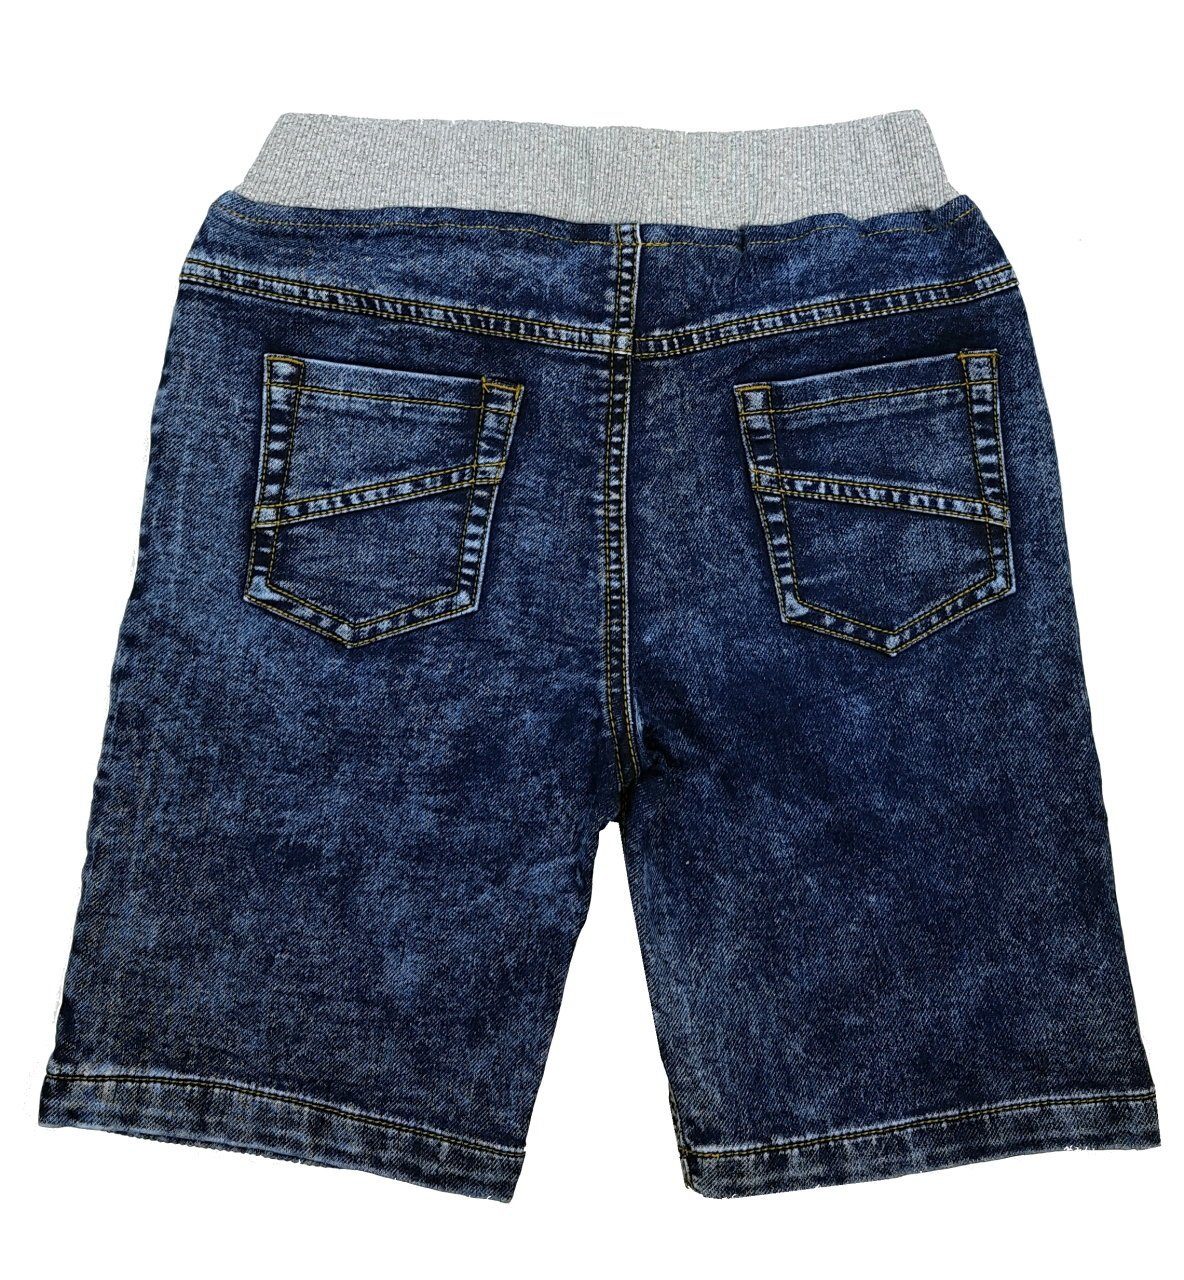 Fashion Boy Sommerhose, Jeans Bermuda Jn206 Jogg-Jeansbermudas Stretch Hose